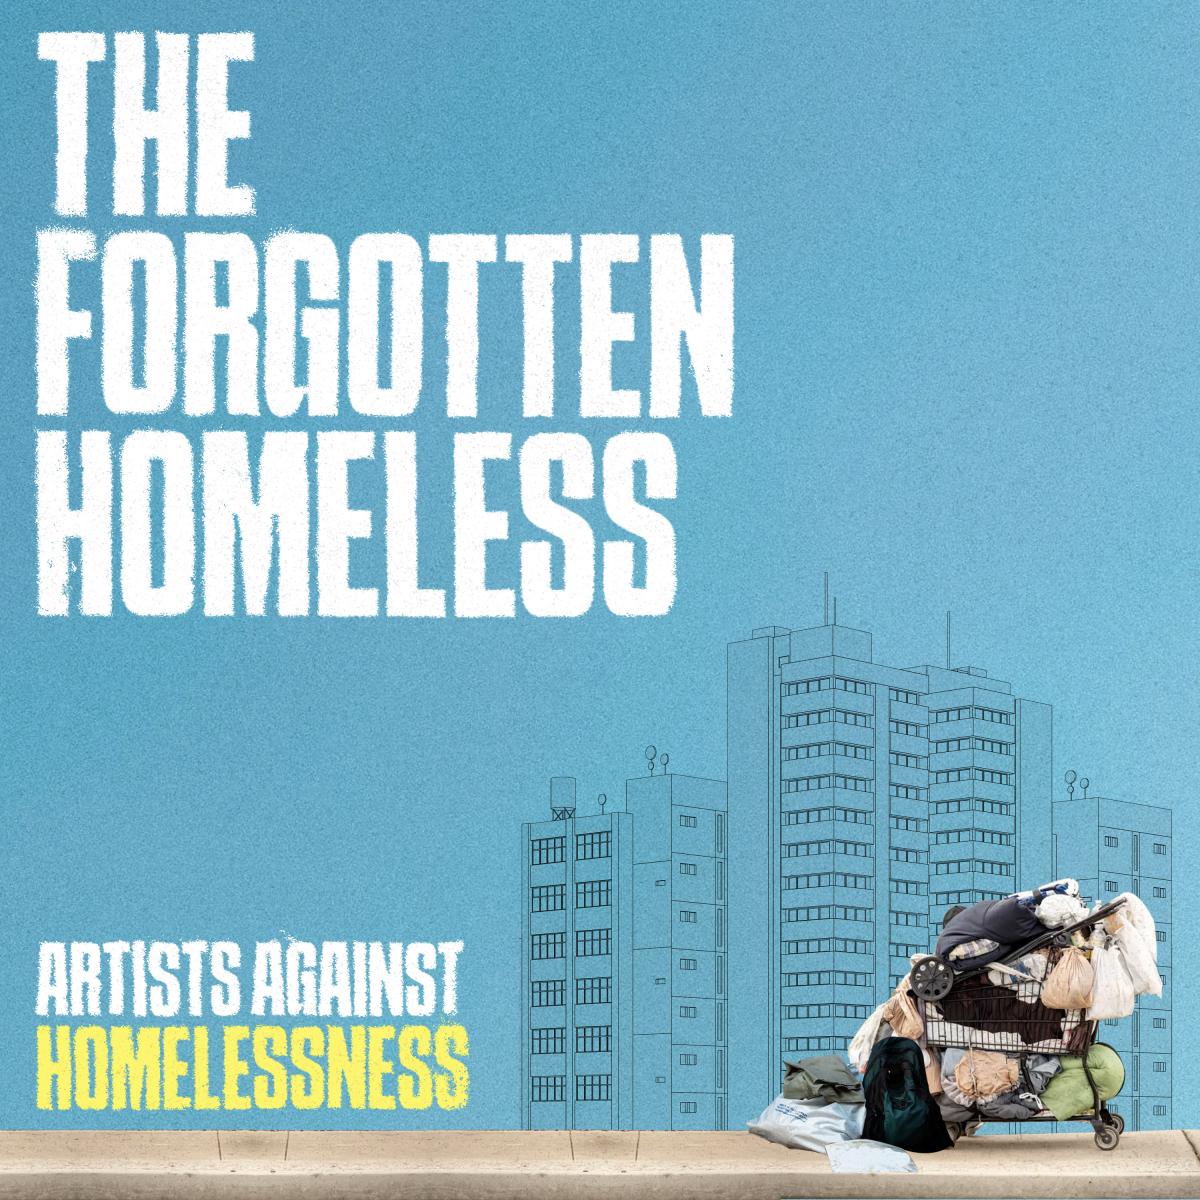 Artists Against Homelessness